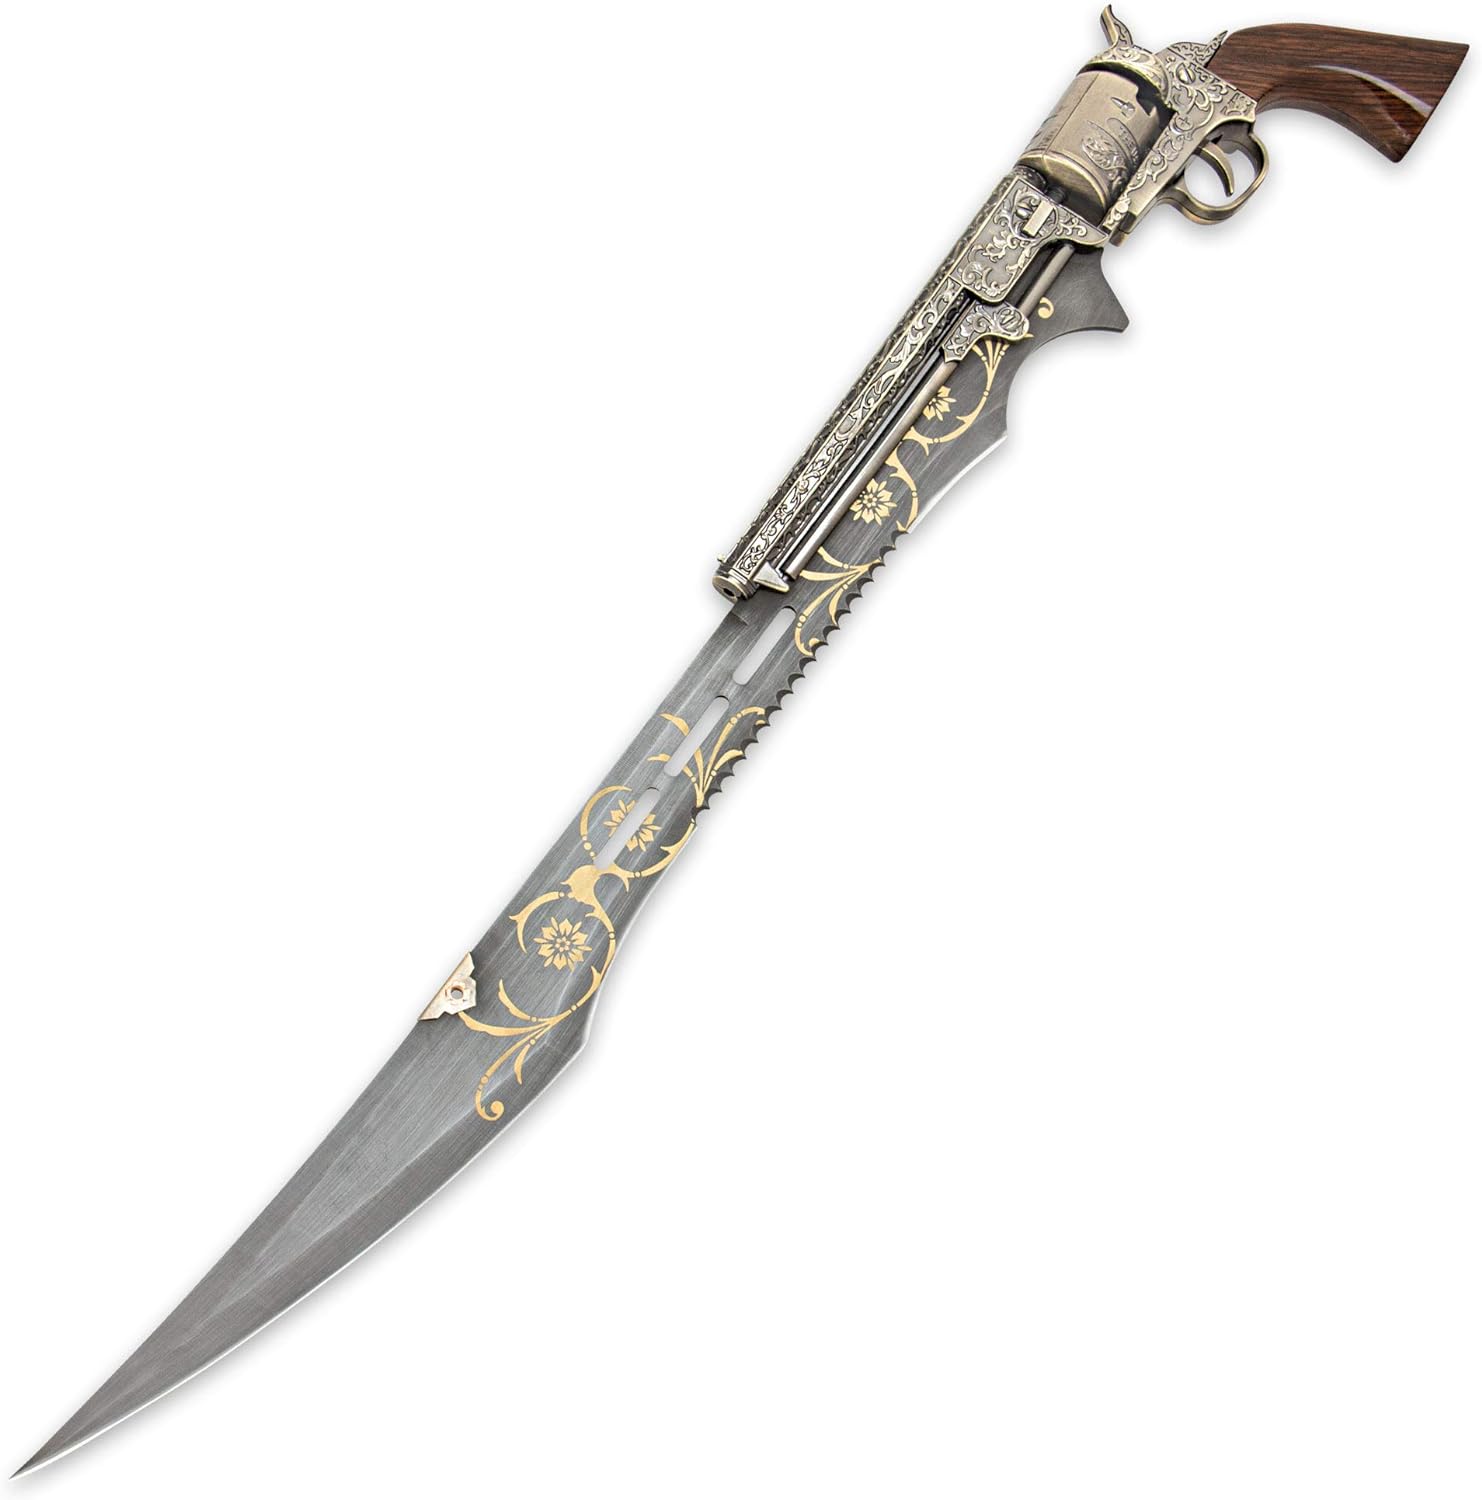 Steampunk Blade Cane Sword